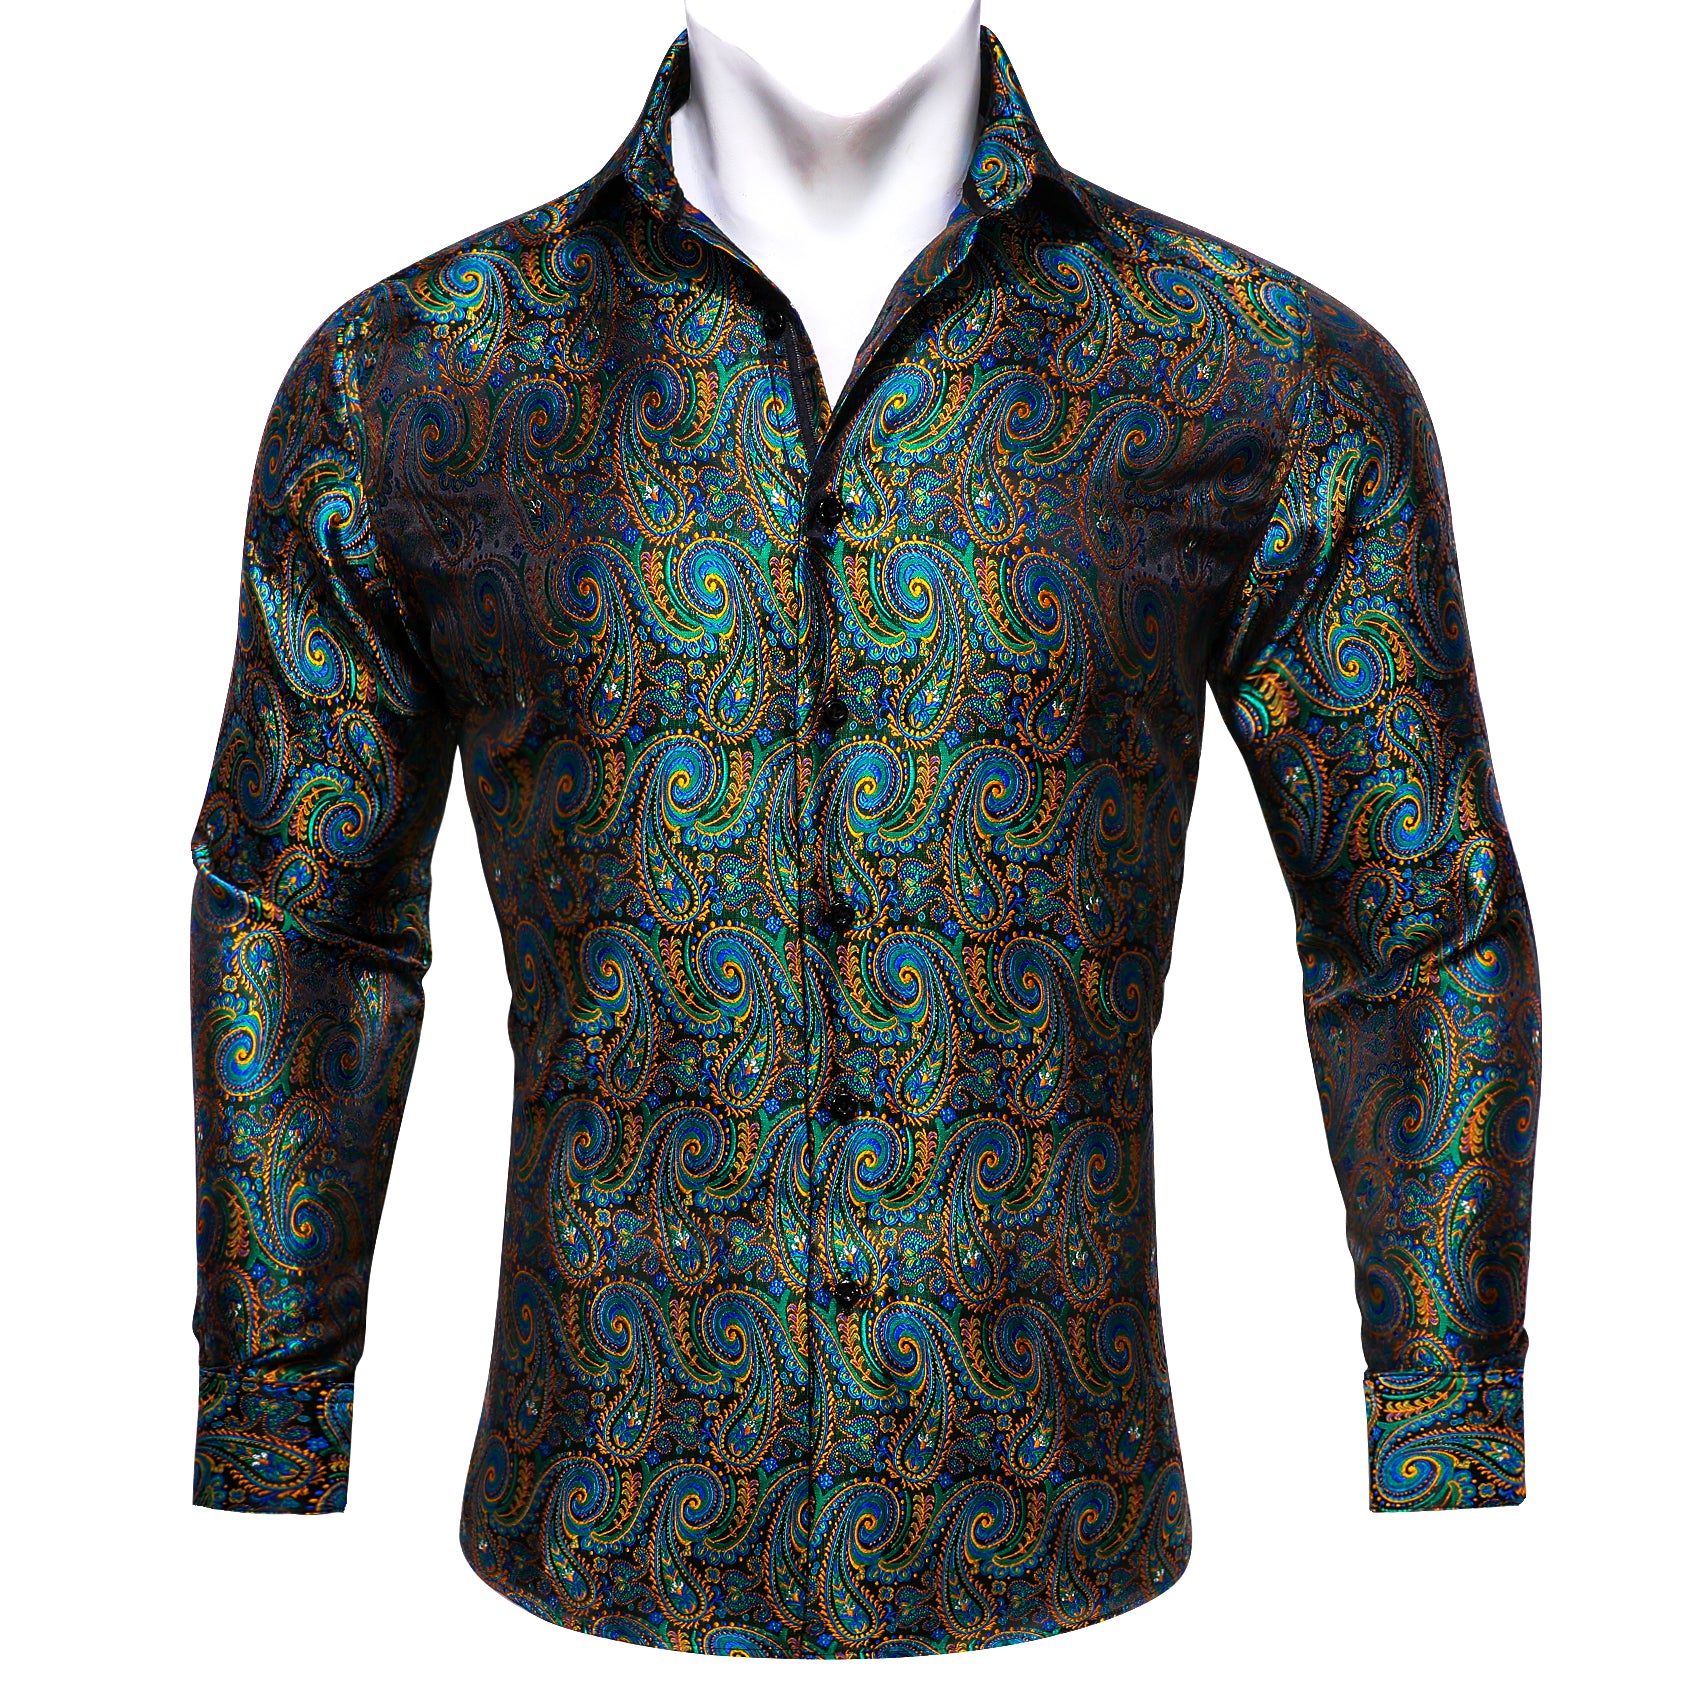 Teal blue green shirt with gold blue jacquard paisley pattern long sleeve shirts